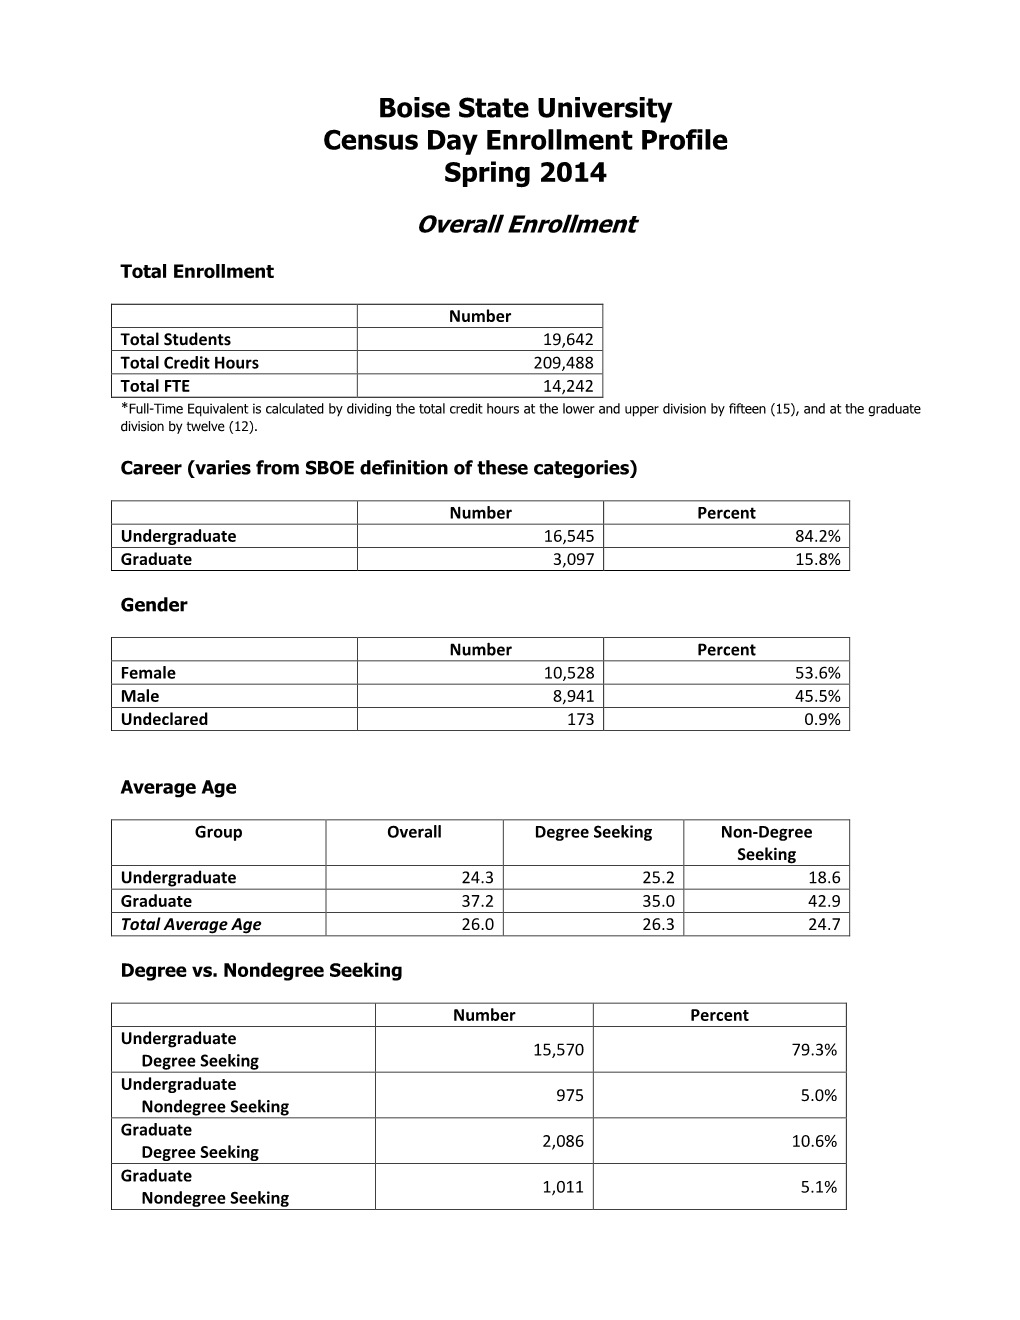 Boise State University Census Day Enrollment Profile Spring 2014